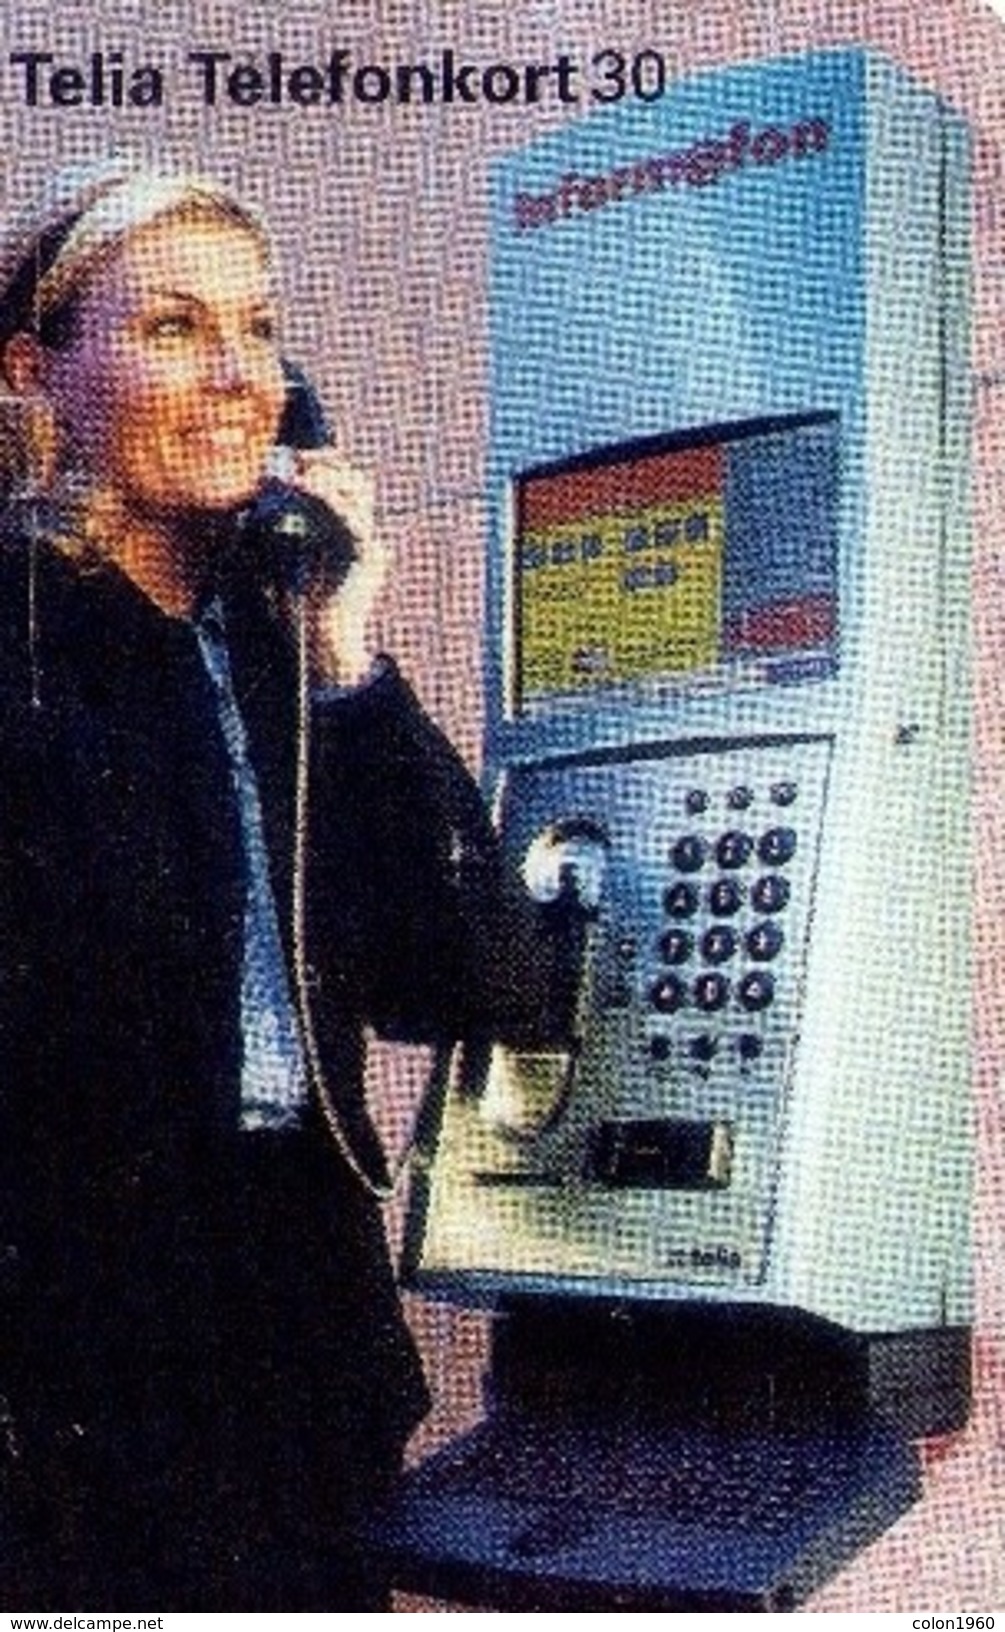 SUECIA. SE-TEL-030-0242. Telia InformSWE-fon 1 - Woman On Phone. 1997-06. (426) - Schweden